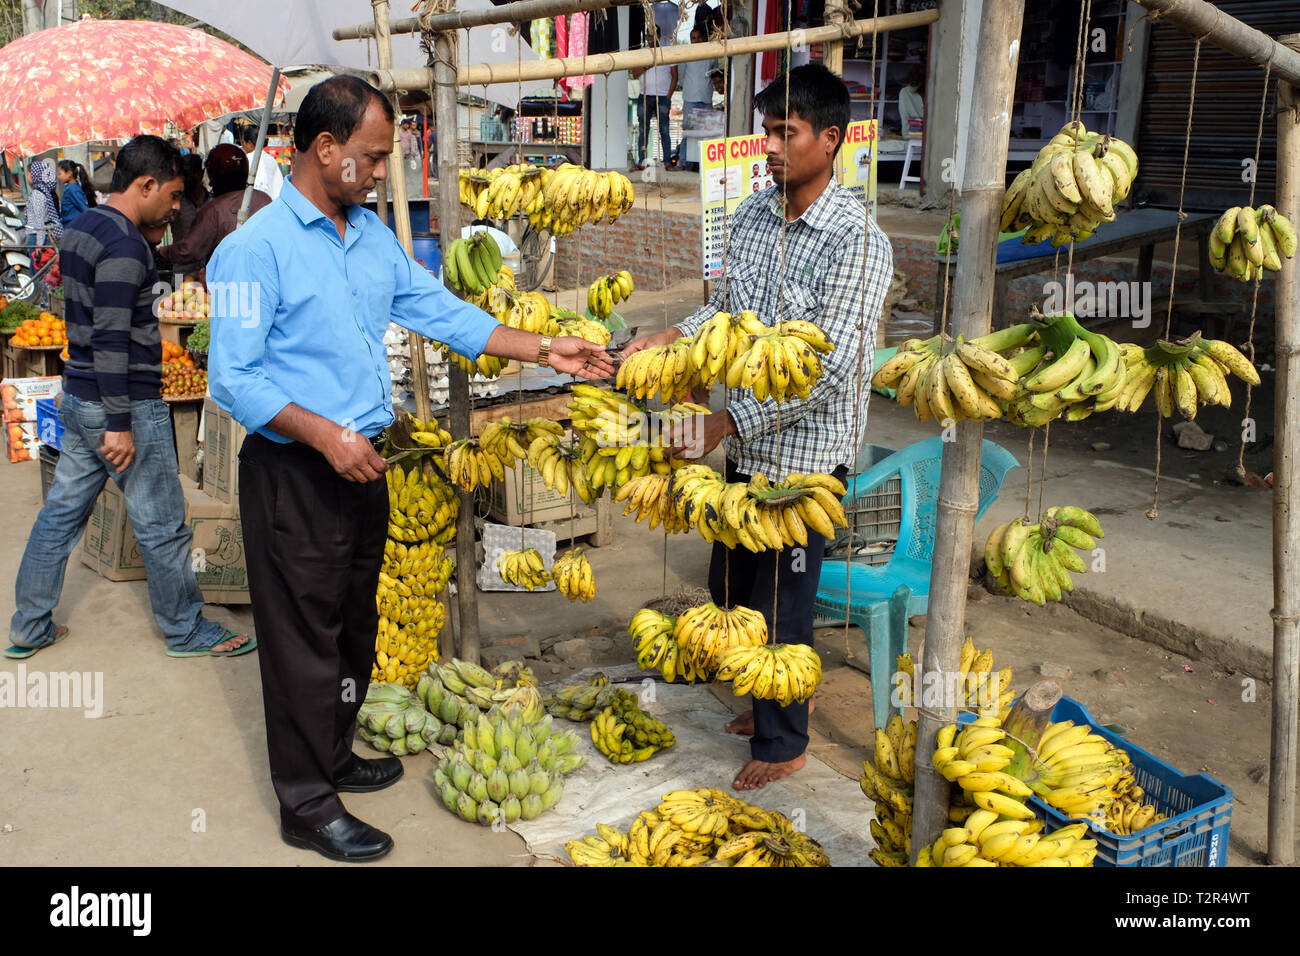 Mercato di frutta e verdura in città Jagiroad / Assam, India --- Obst- und Gemüsemarkt in der Stadt Jagiroad/Assam, Indien Foto Stock